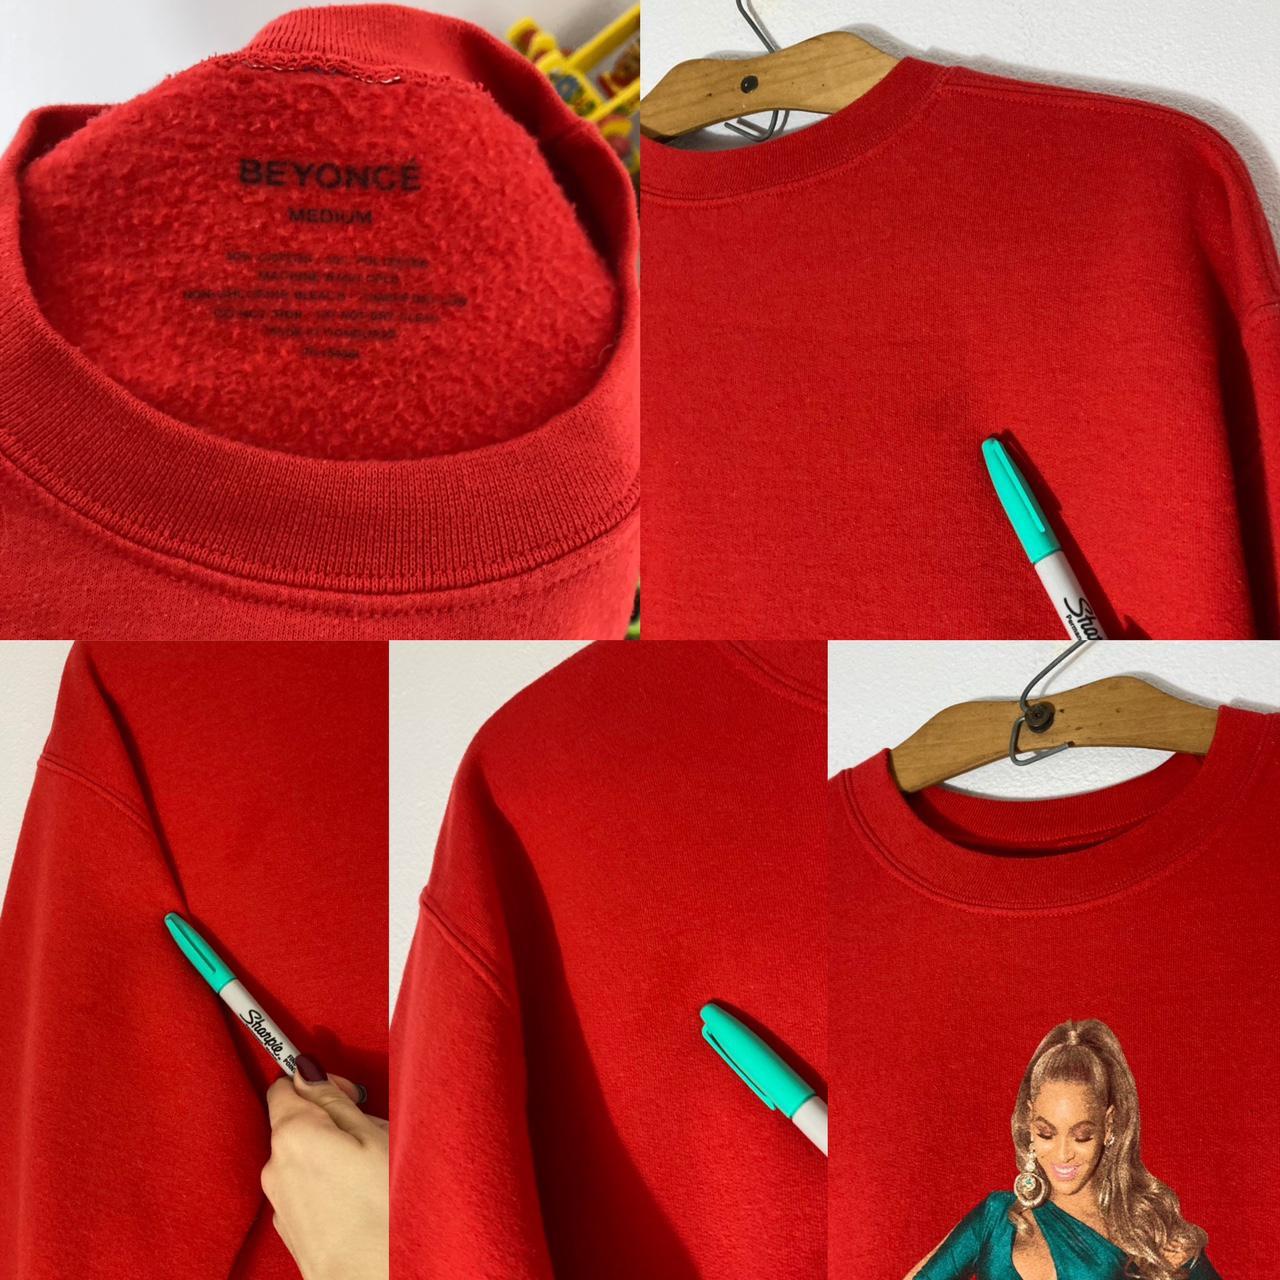 Product Image 4 - Red Beyoncé NOELS Carter sweatshirt

Perfect